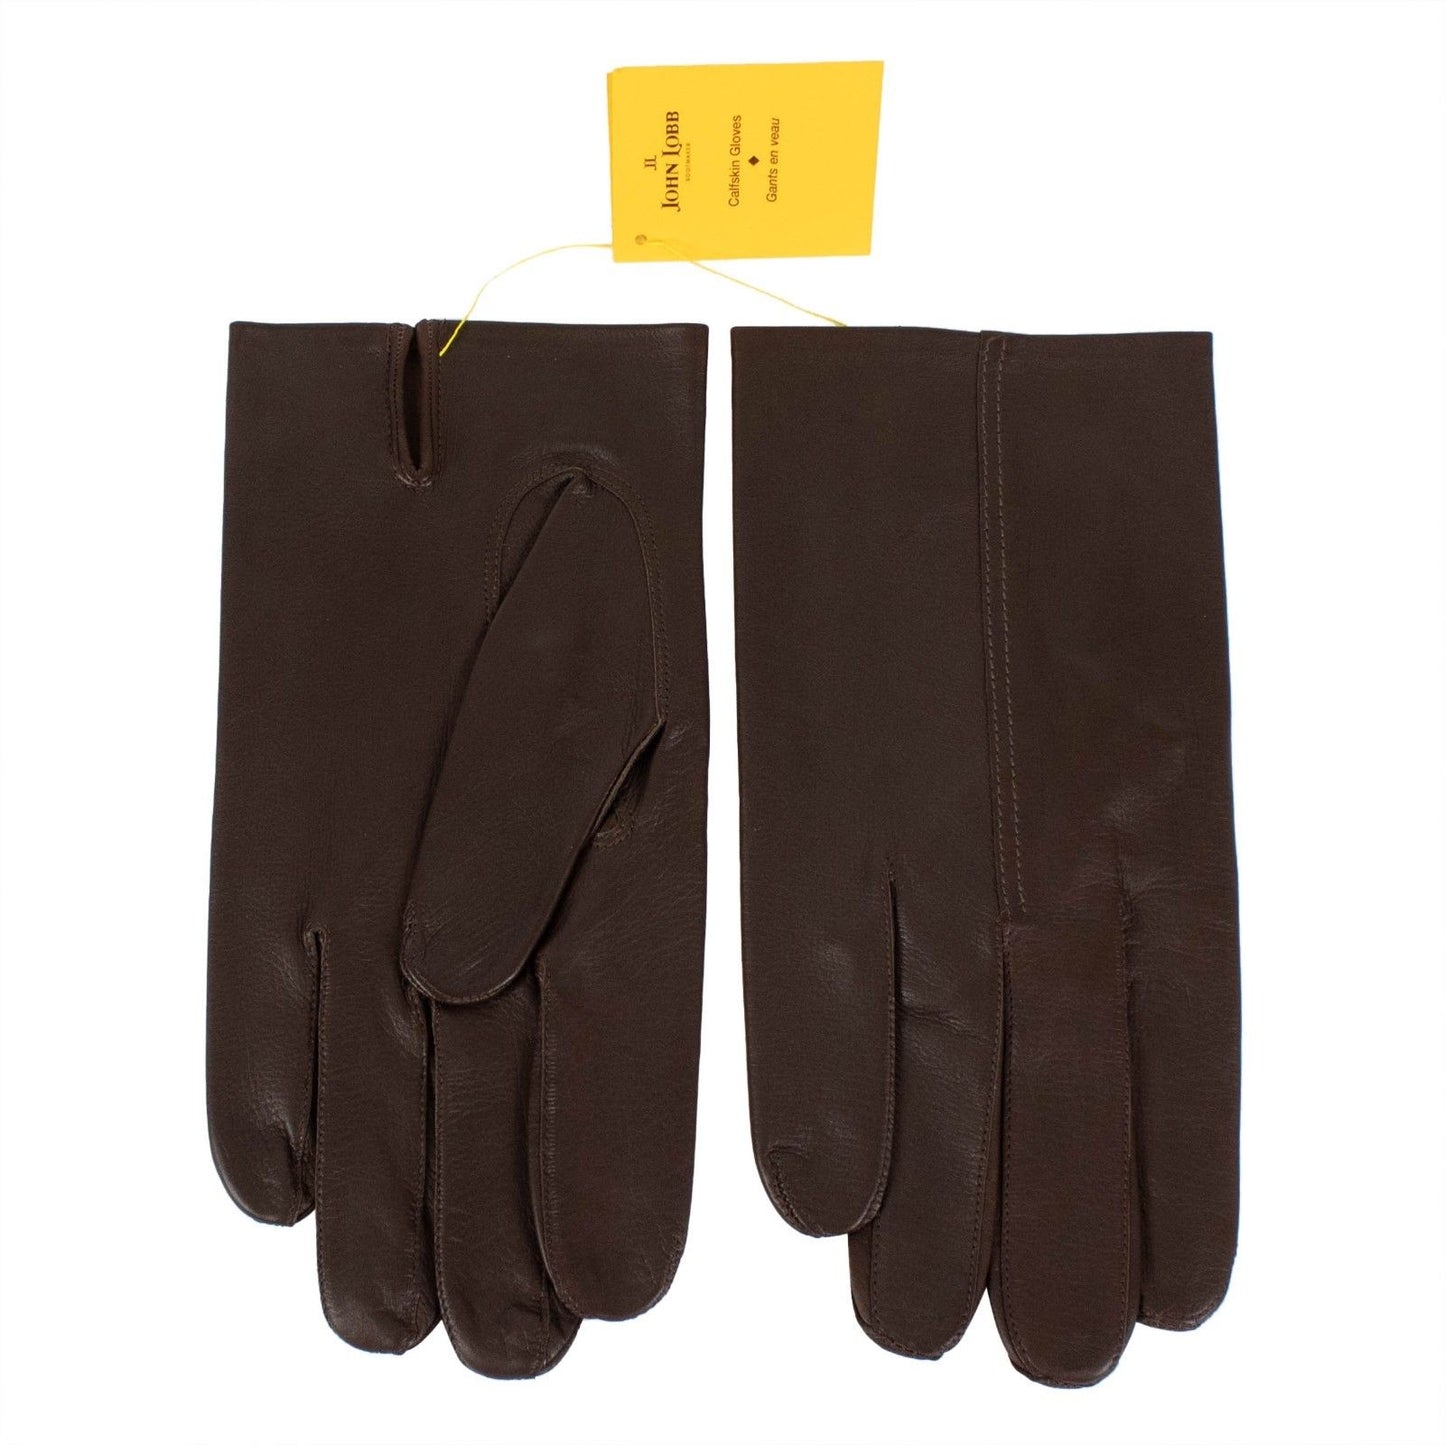 John Lobb Calfskin Leather Gloves - Brown